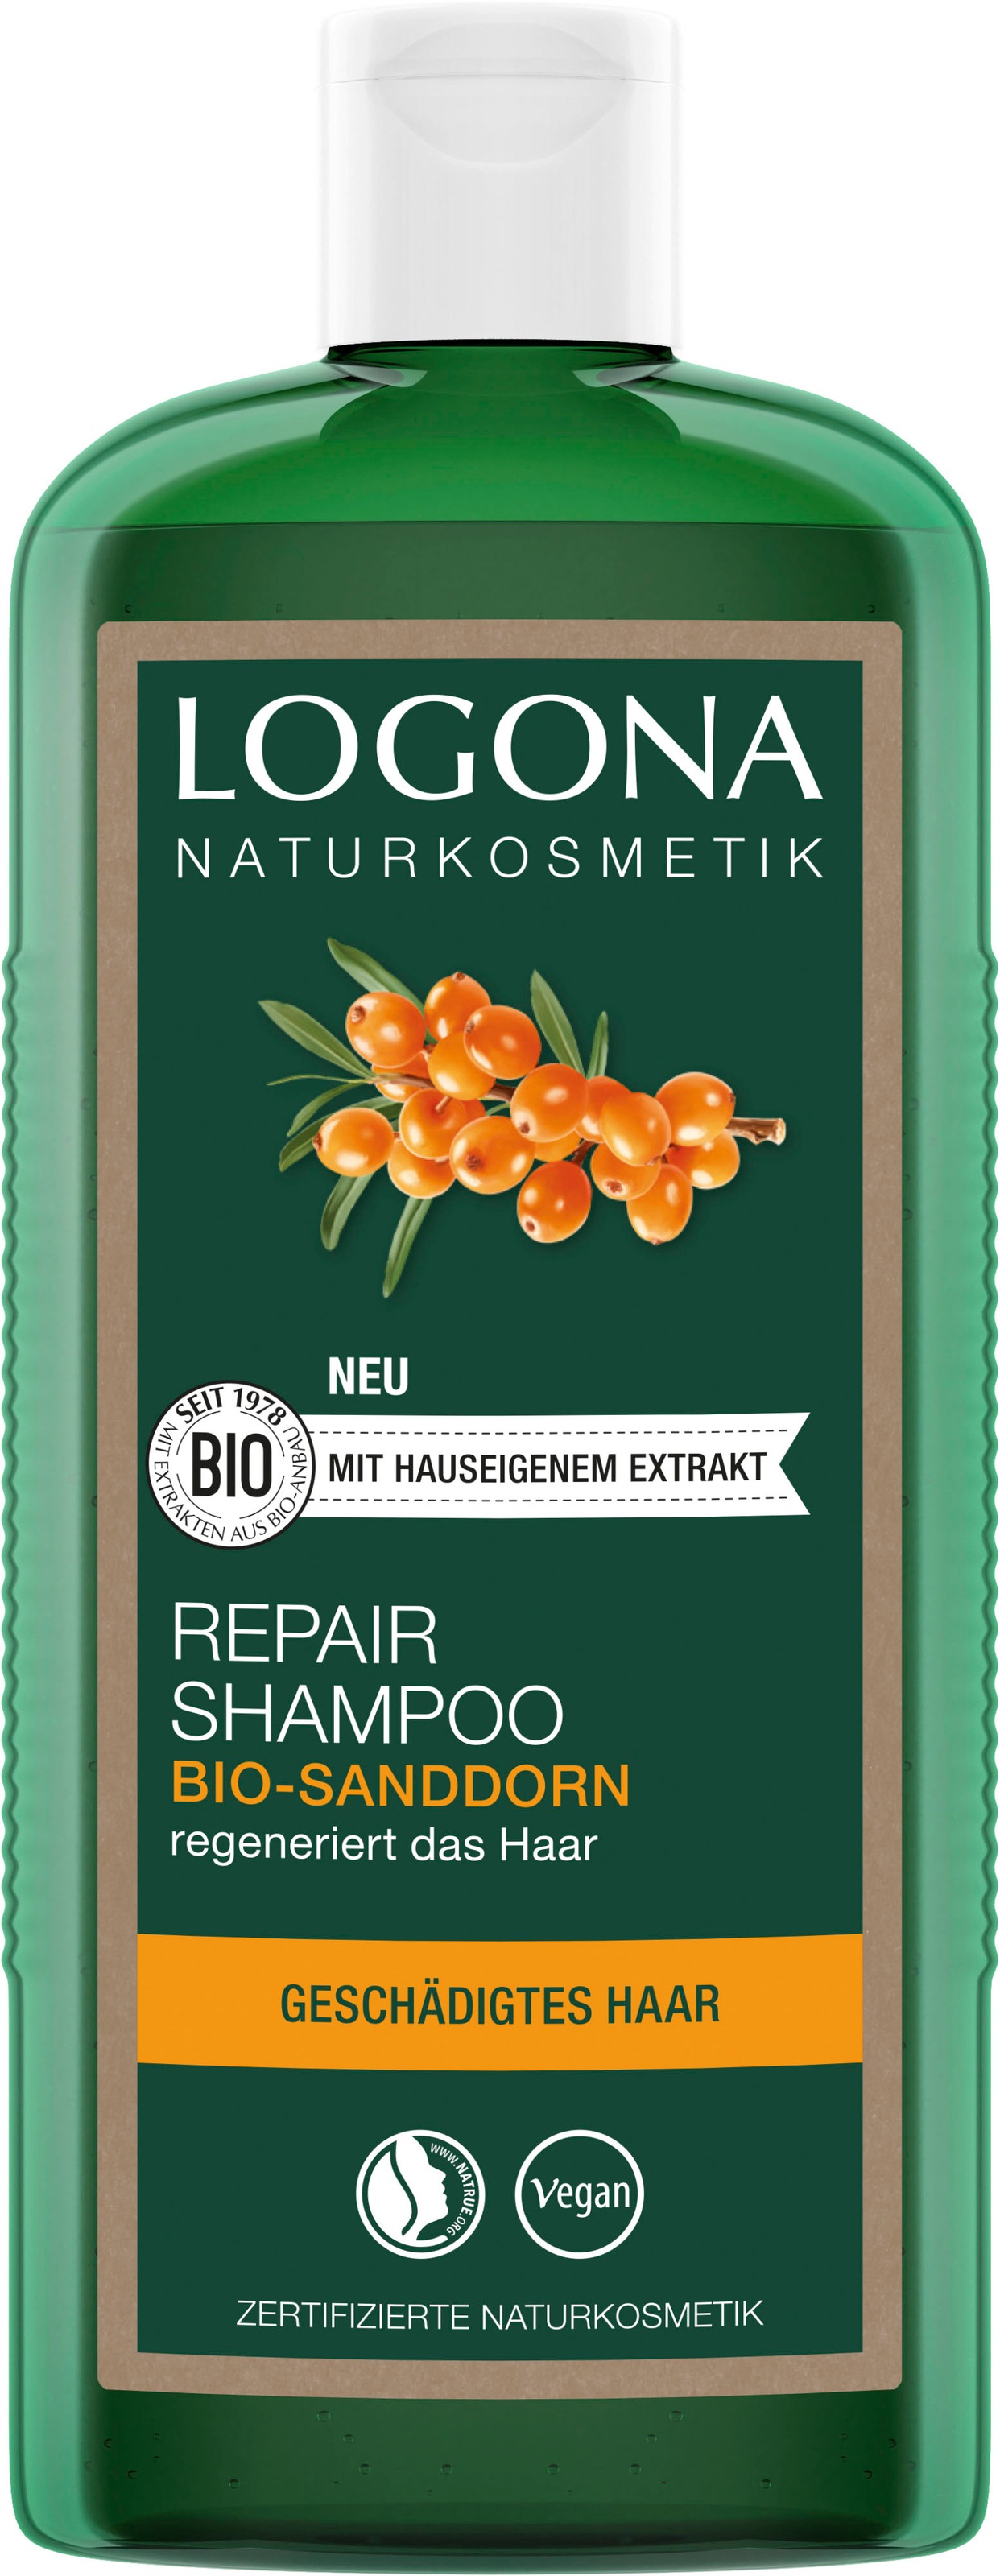 LOGONA Haarshampoo » Repair&Pflege Shampoo Bi...